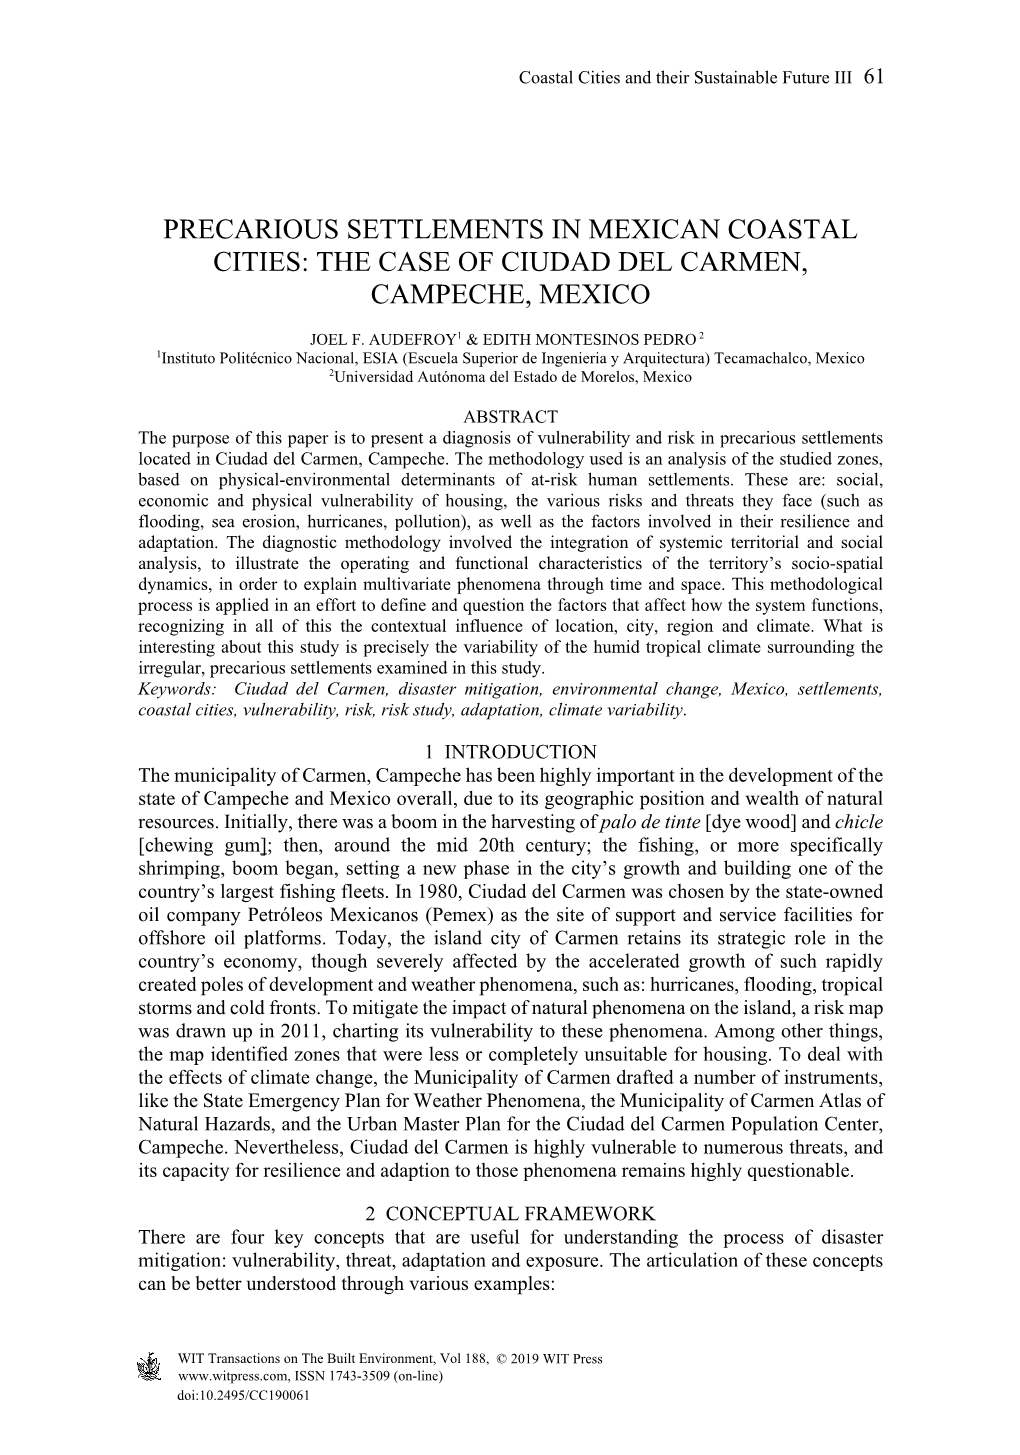 The Case of Ciudad Del Carmen, Campeche, Mexico